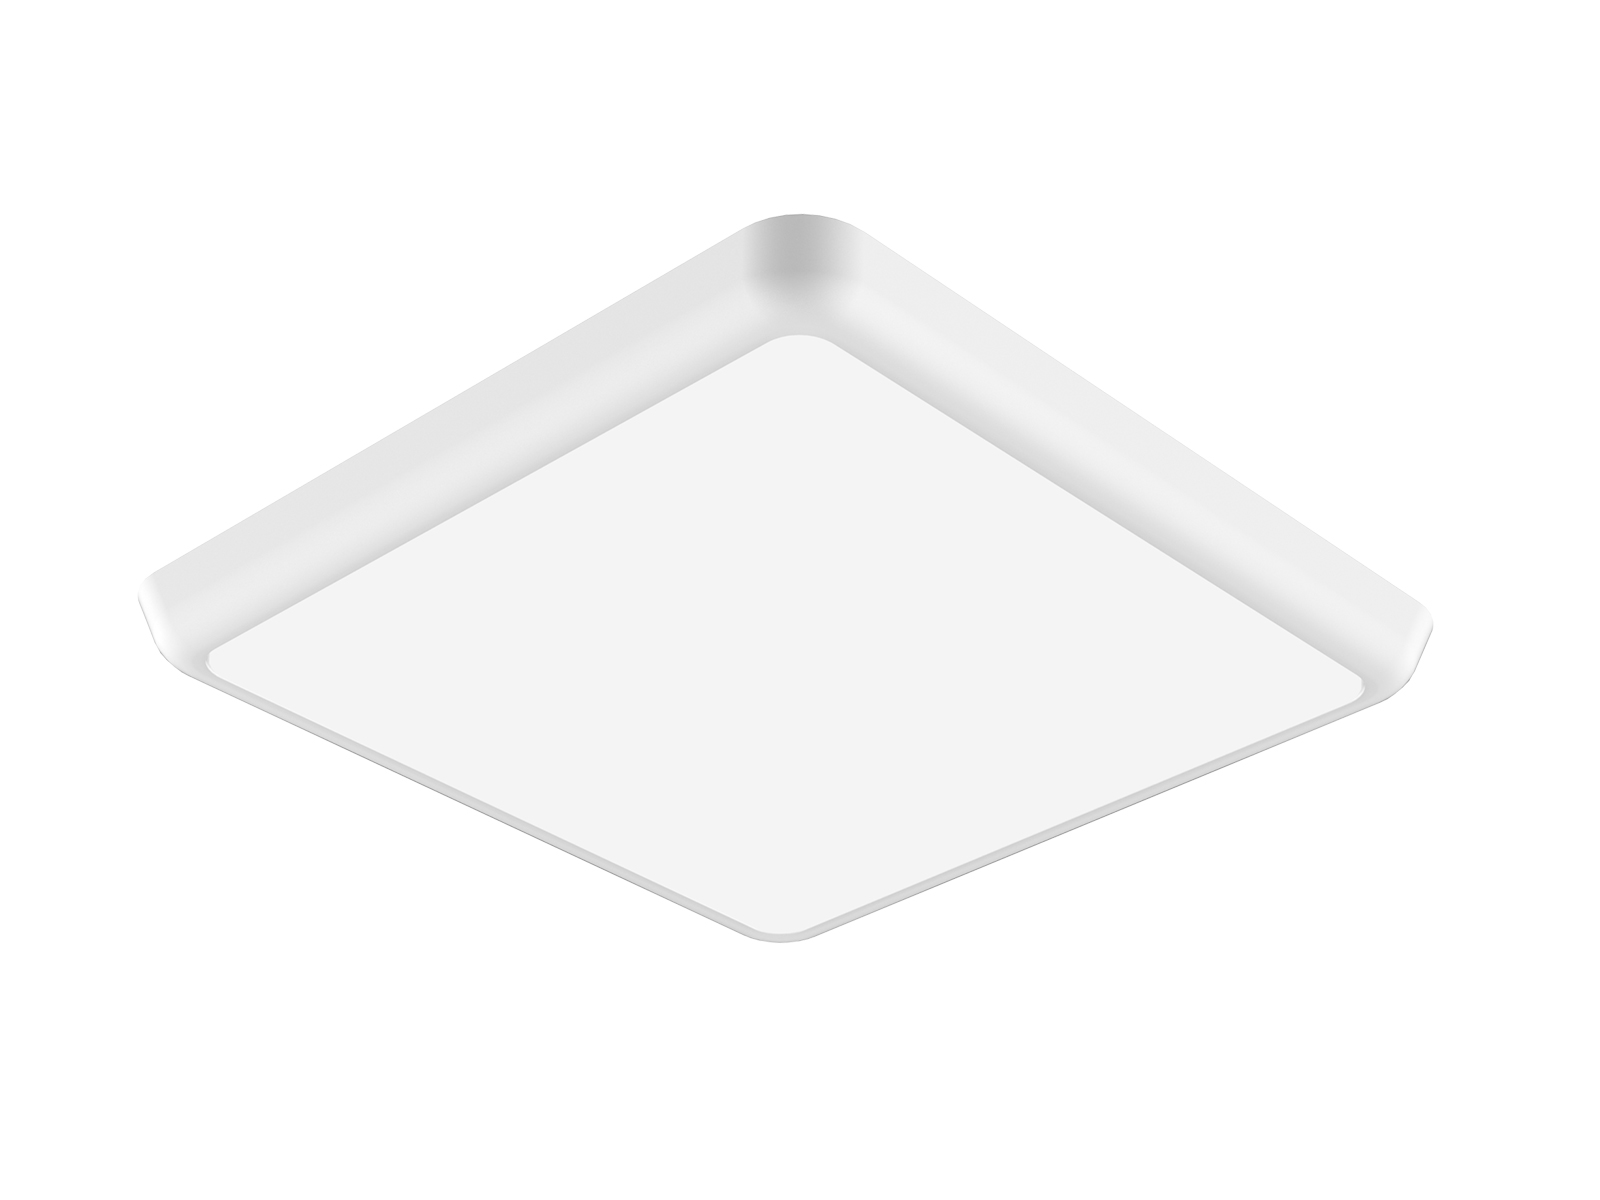 nickel flush kitchen ceiling light square